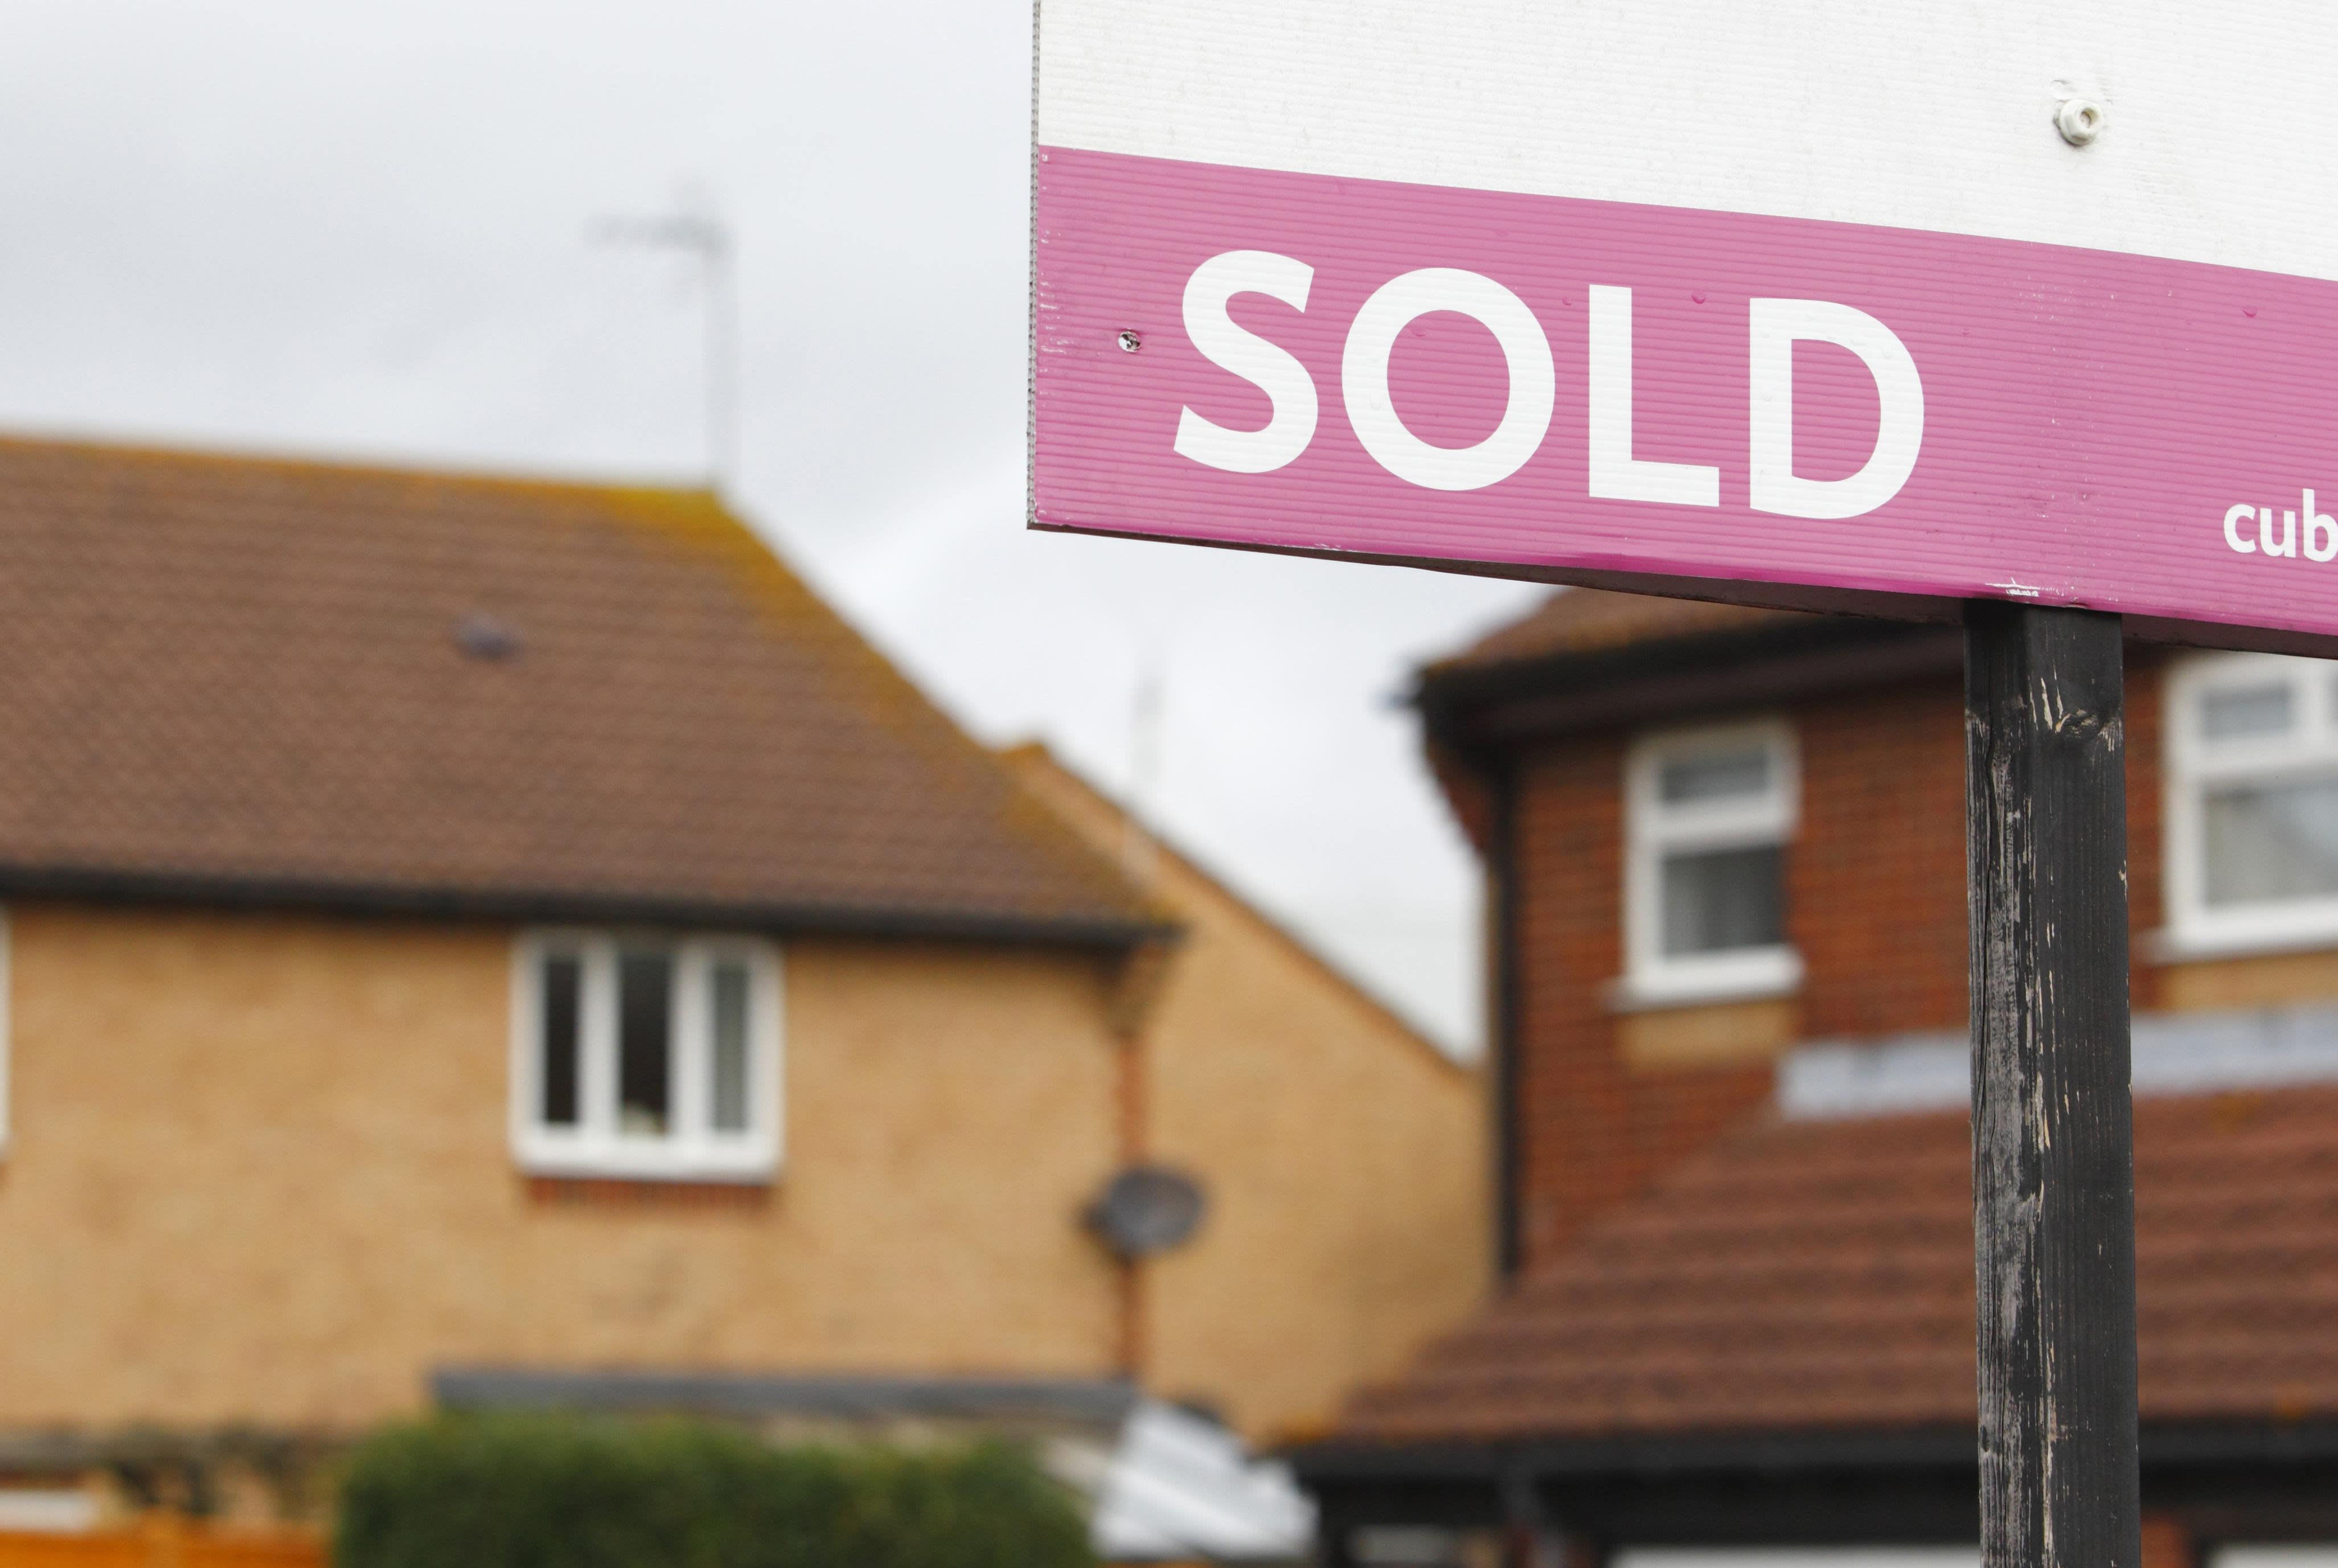 Property agent calls top of London housing market